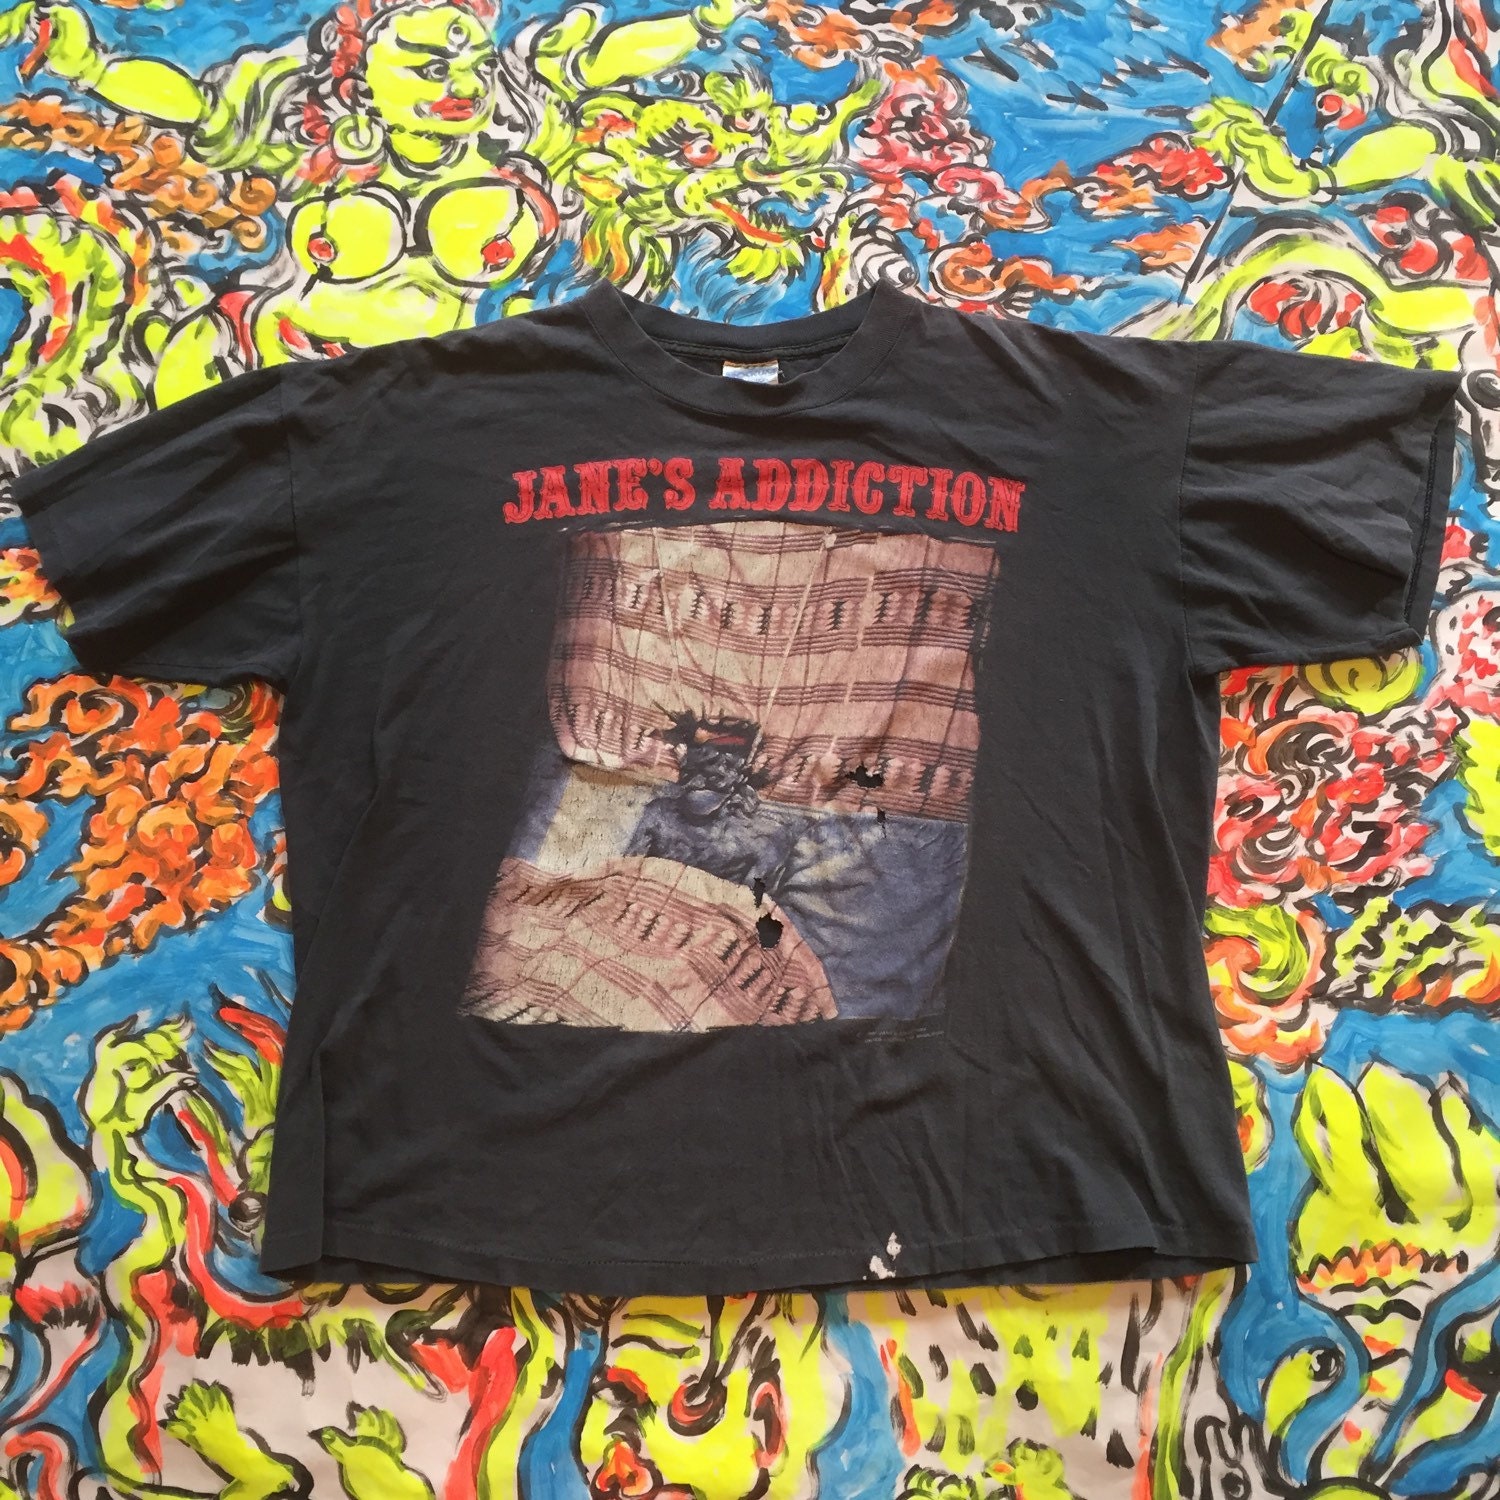 Vintage Janes Addiction shirt